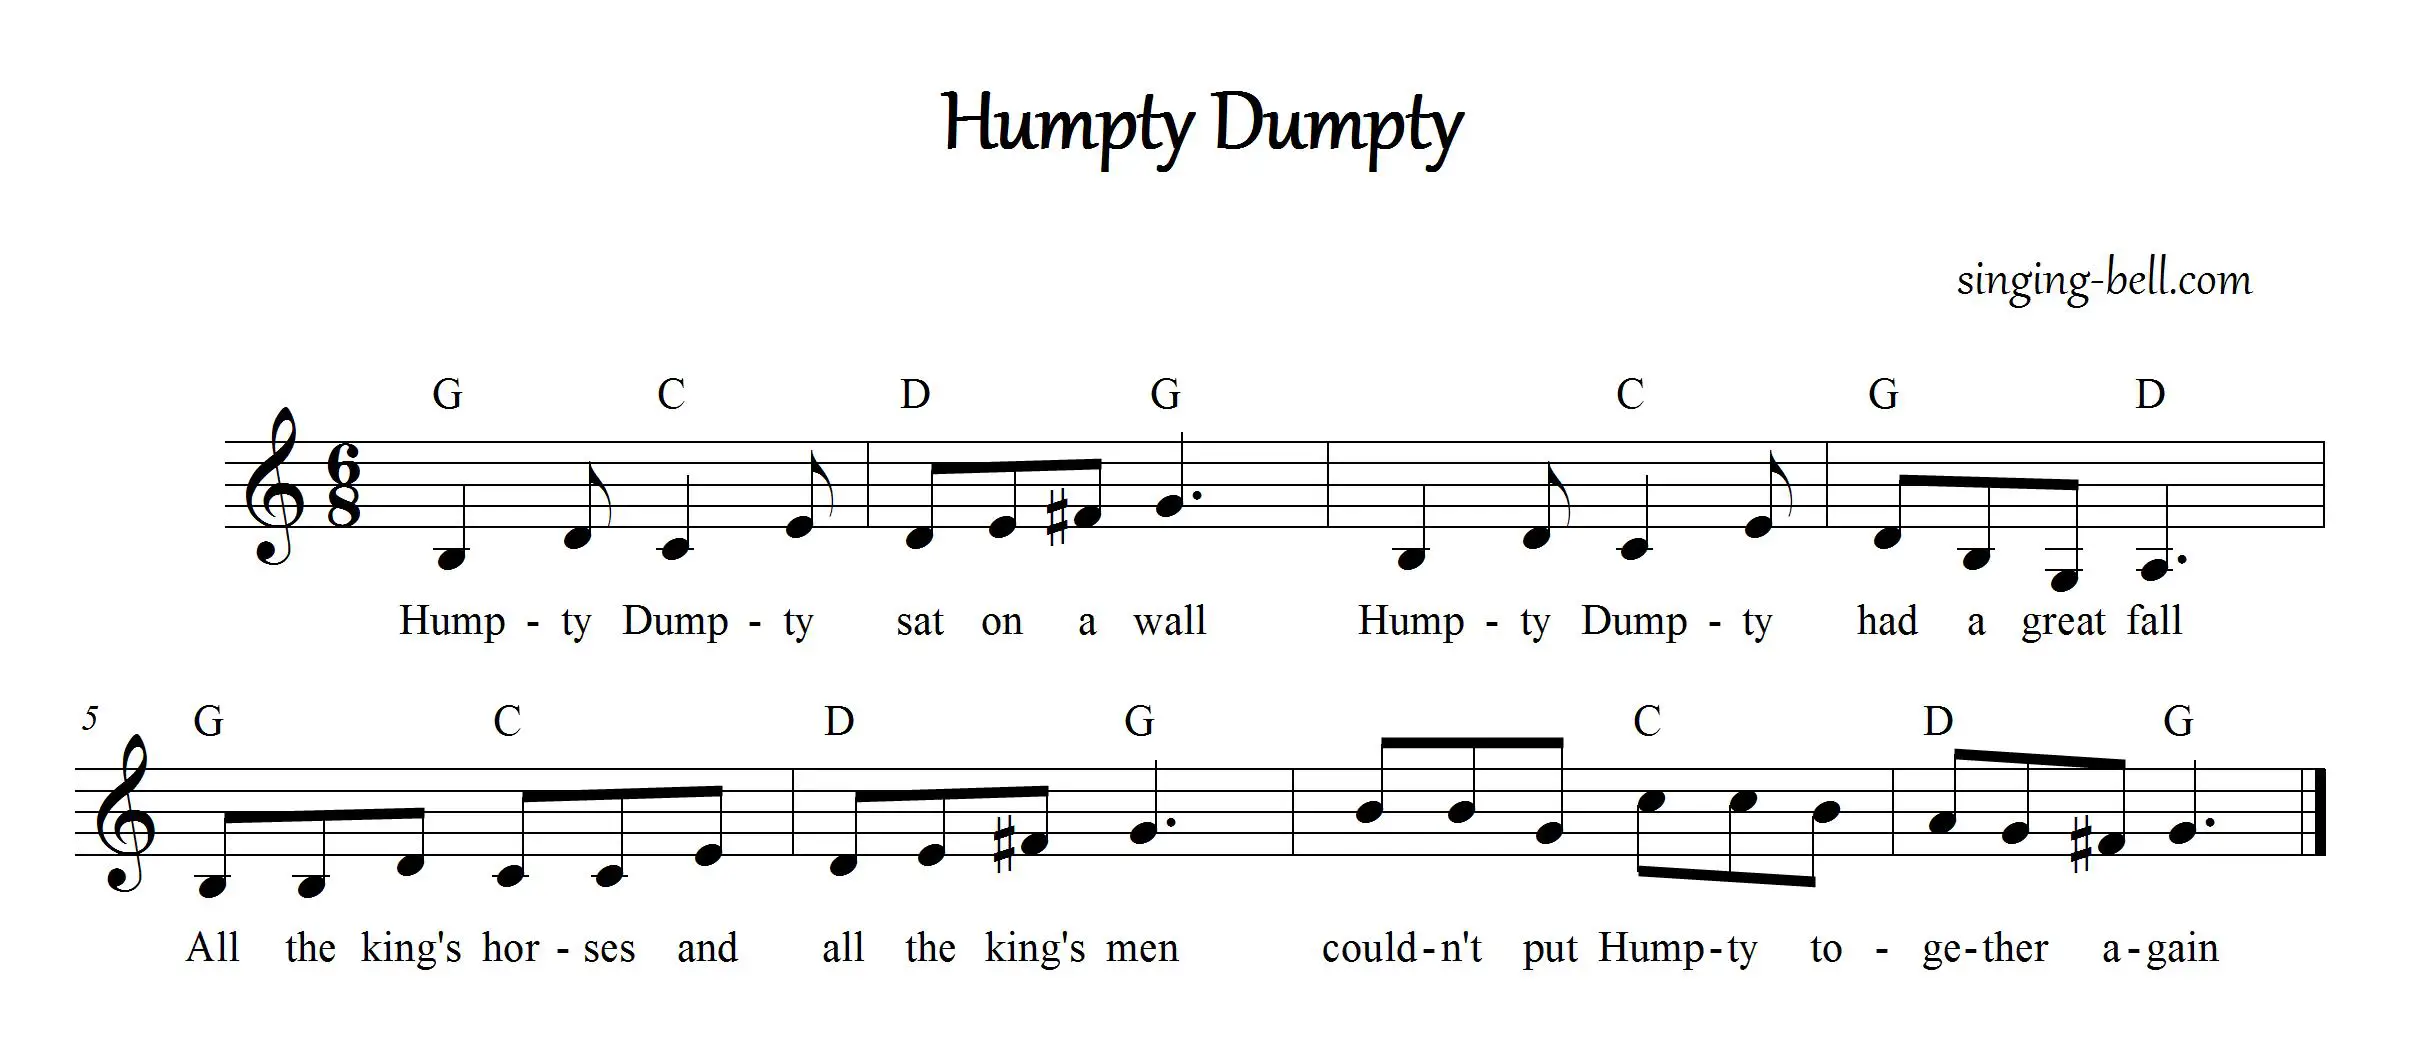 HumptyDumpty_singing-bell